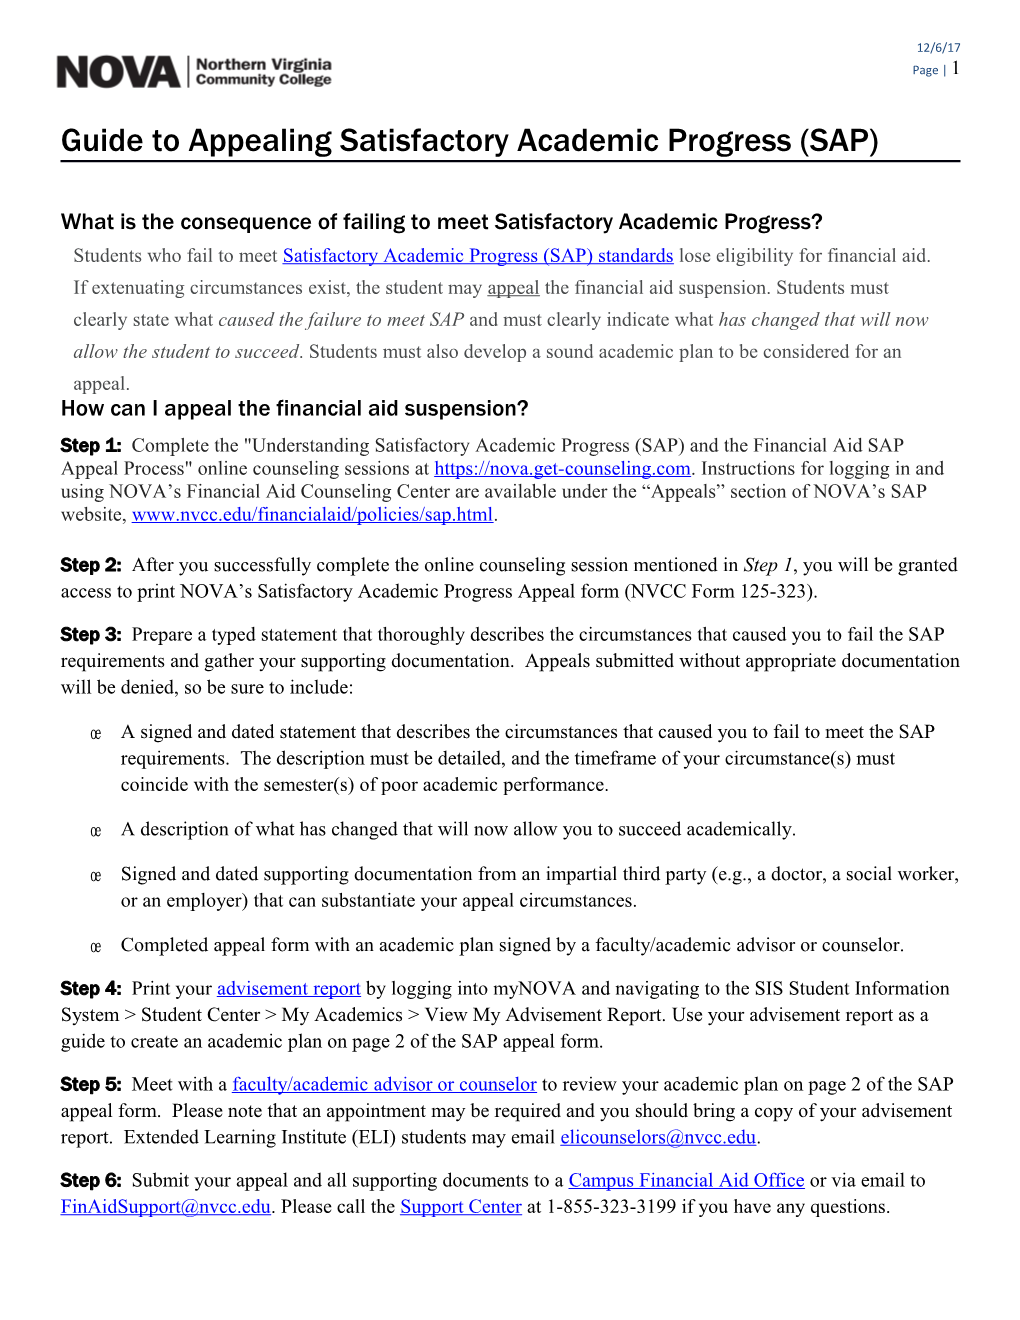 Guide to Appealing Satisfactory Academic Progress (SAP)